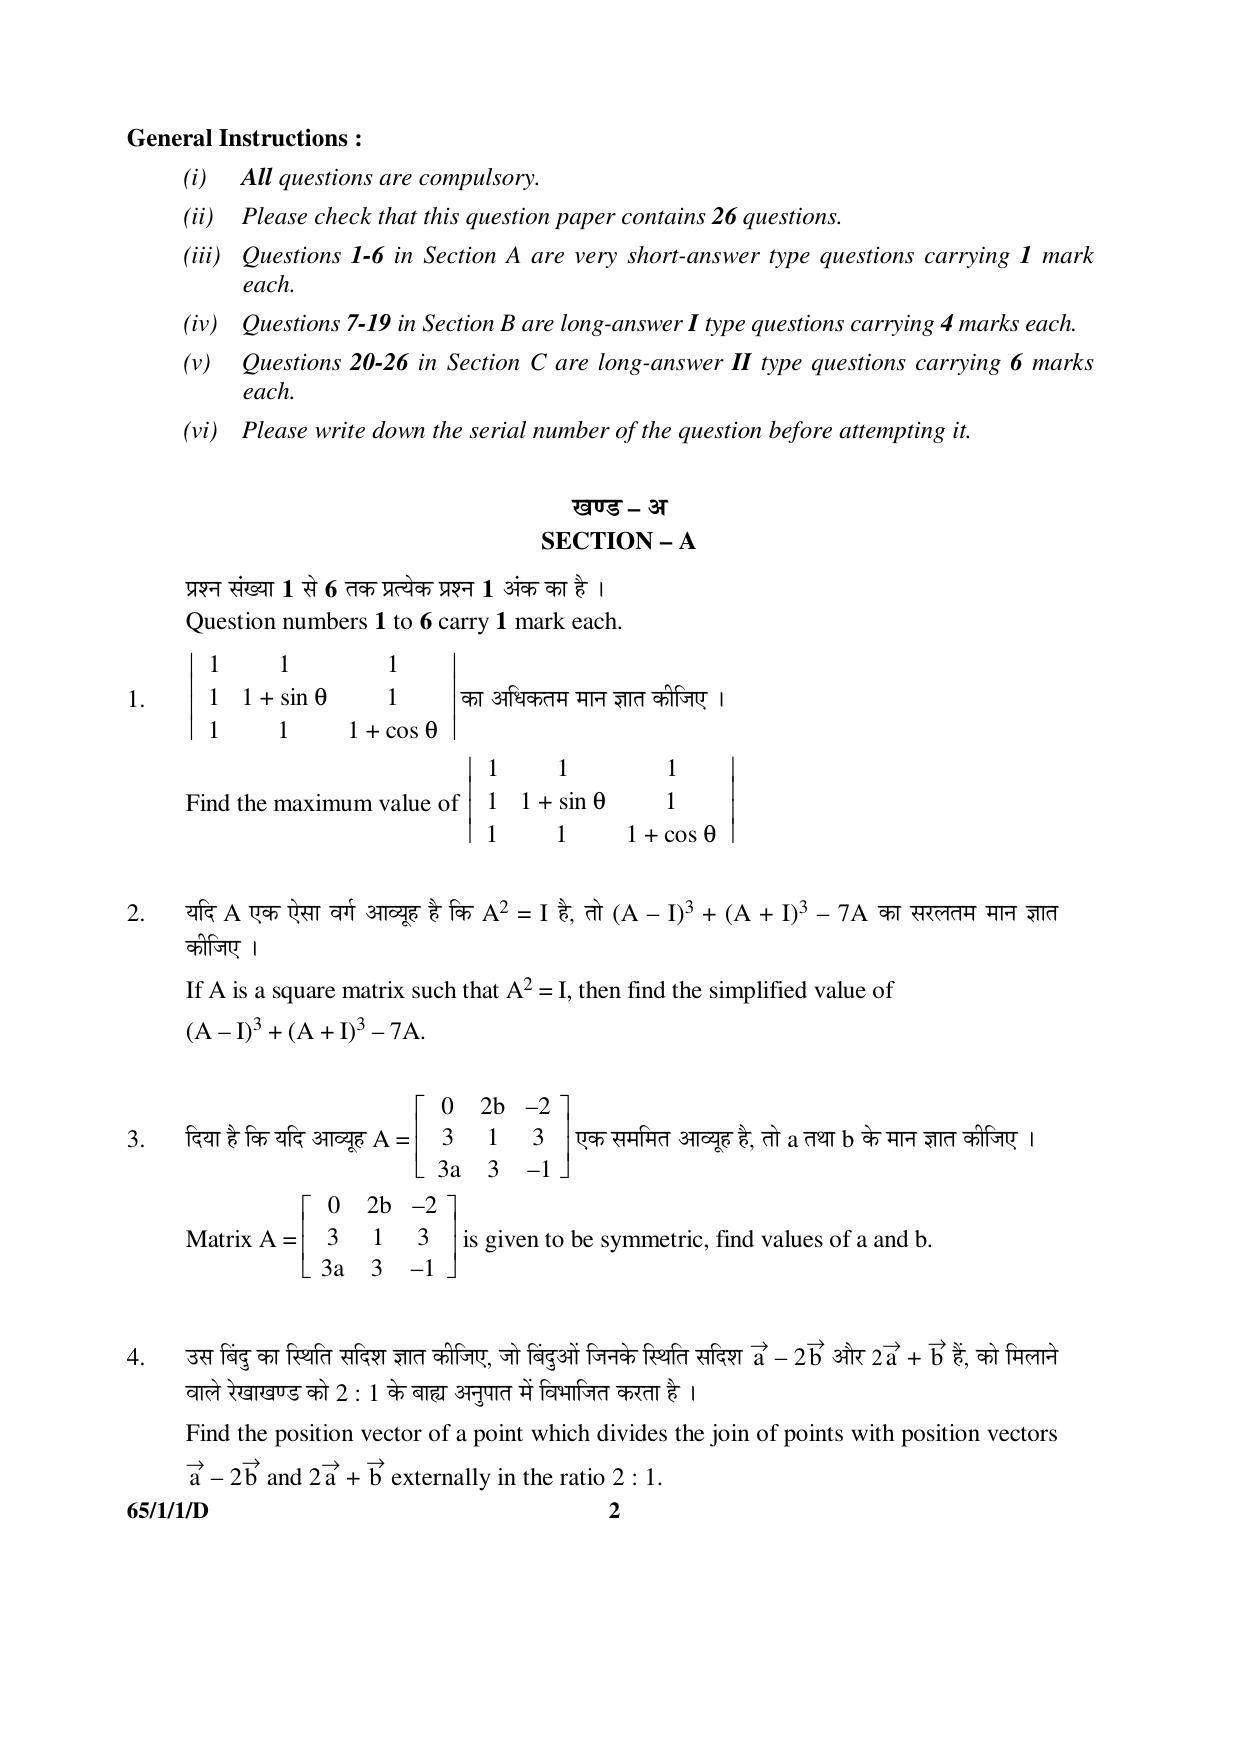 CBSE Class 12 65-1-1-D MATHEMATICS 2016 Question Paper - Page 2